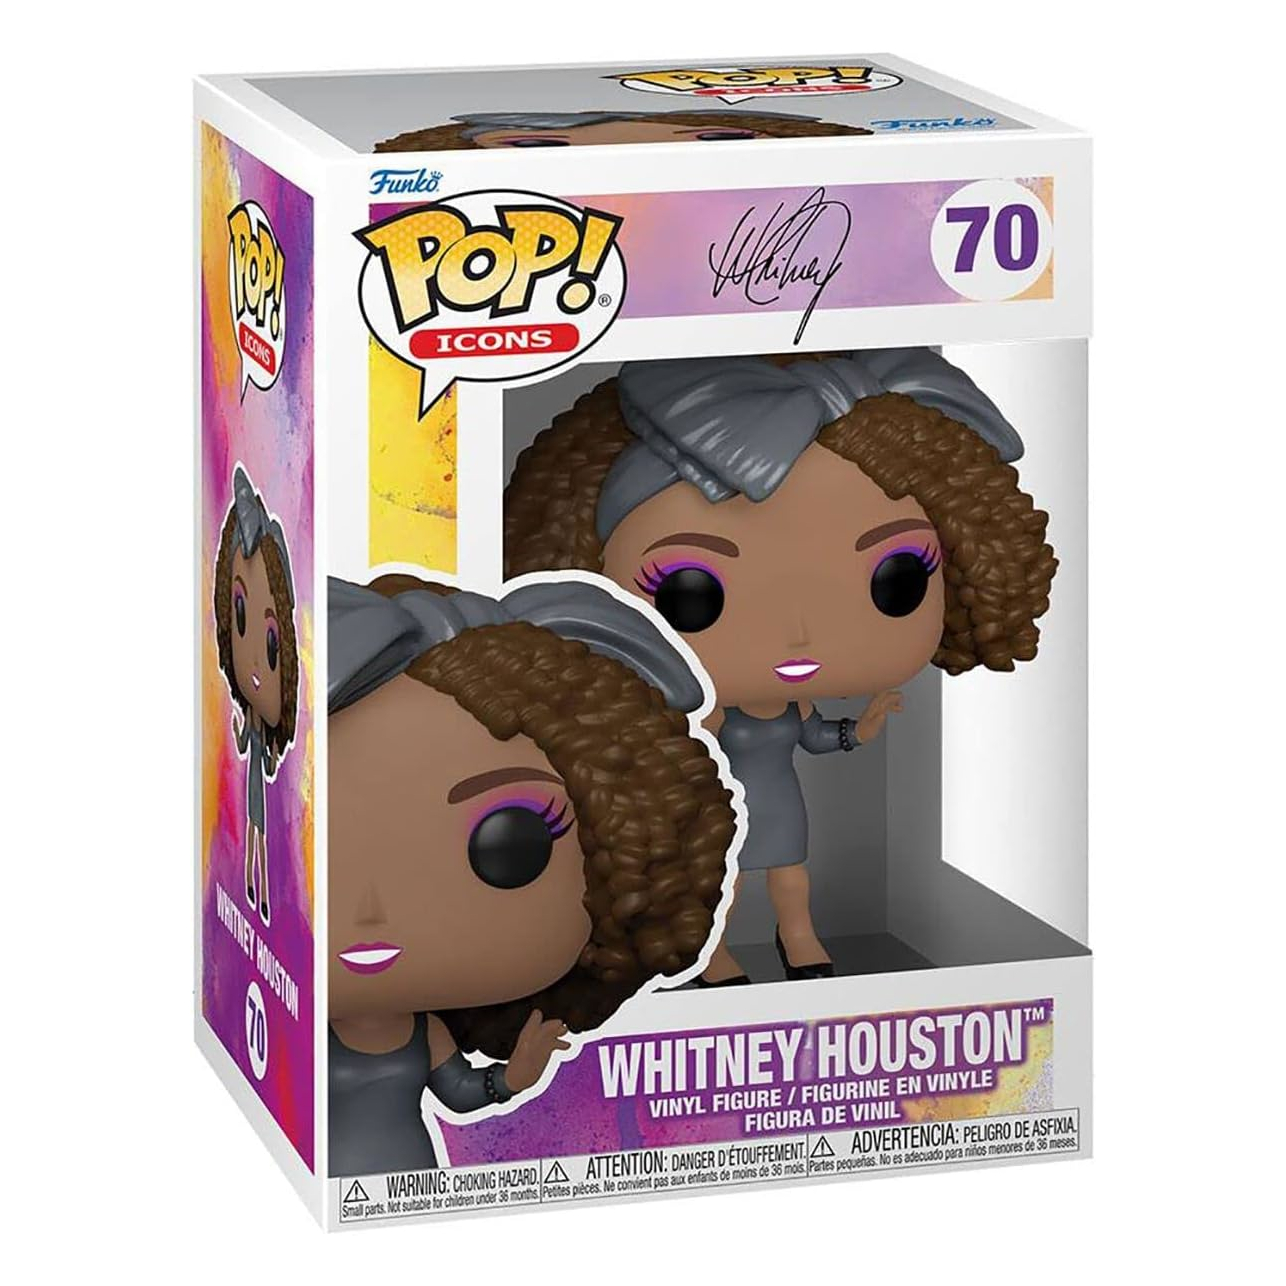 Фигурка Funko Pop! Icons Whitney Houston How Will I Know фигурка funko pop icons уитни хьюстон 60932 10 см